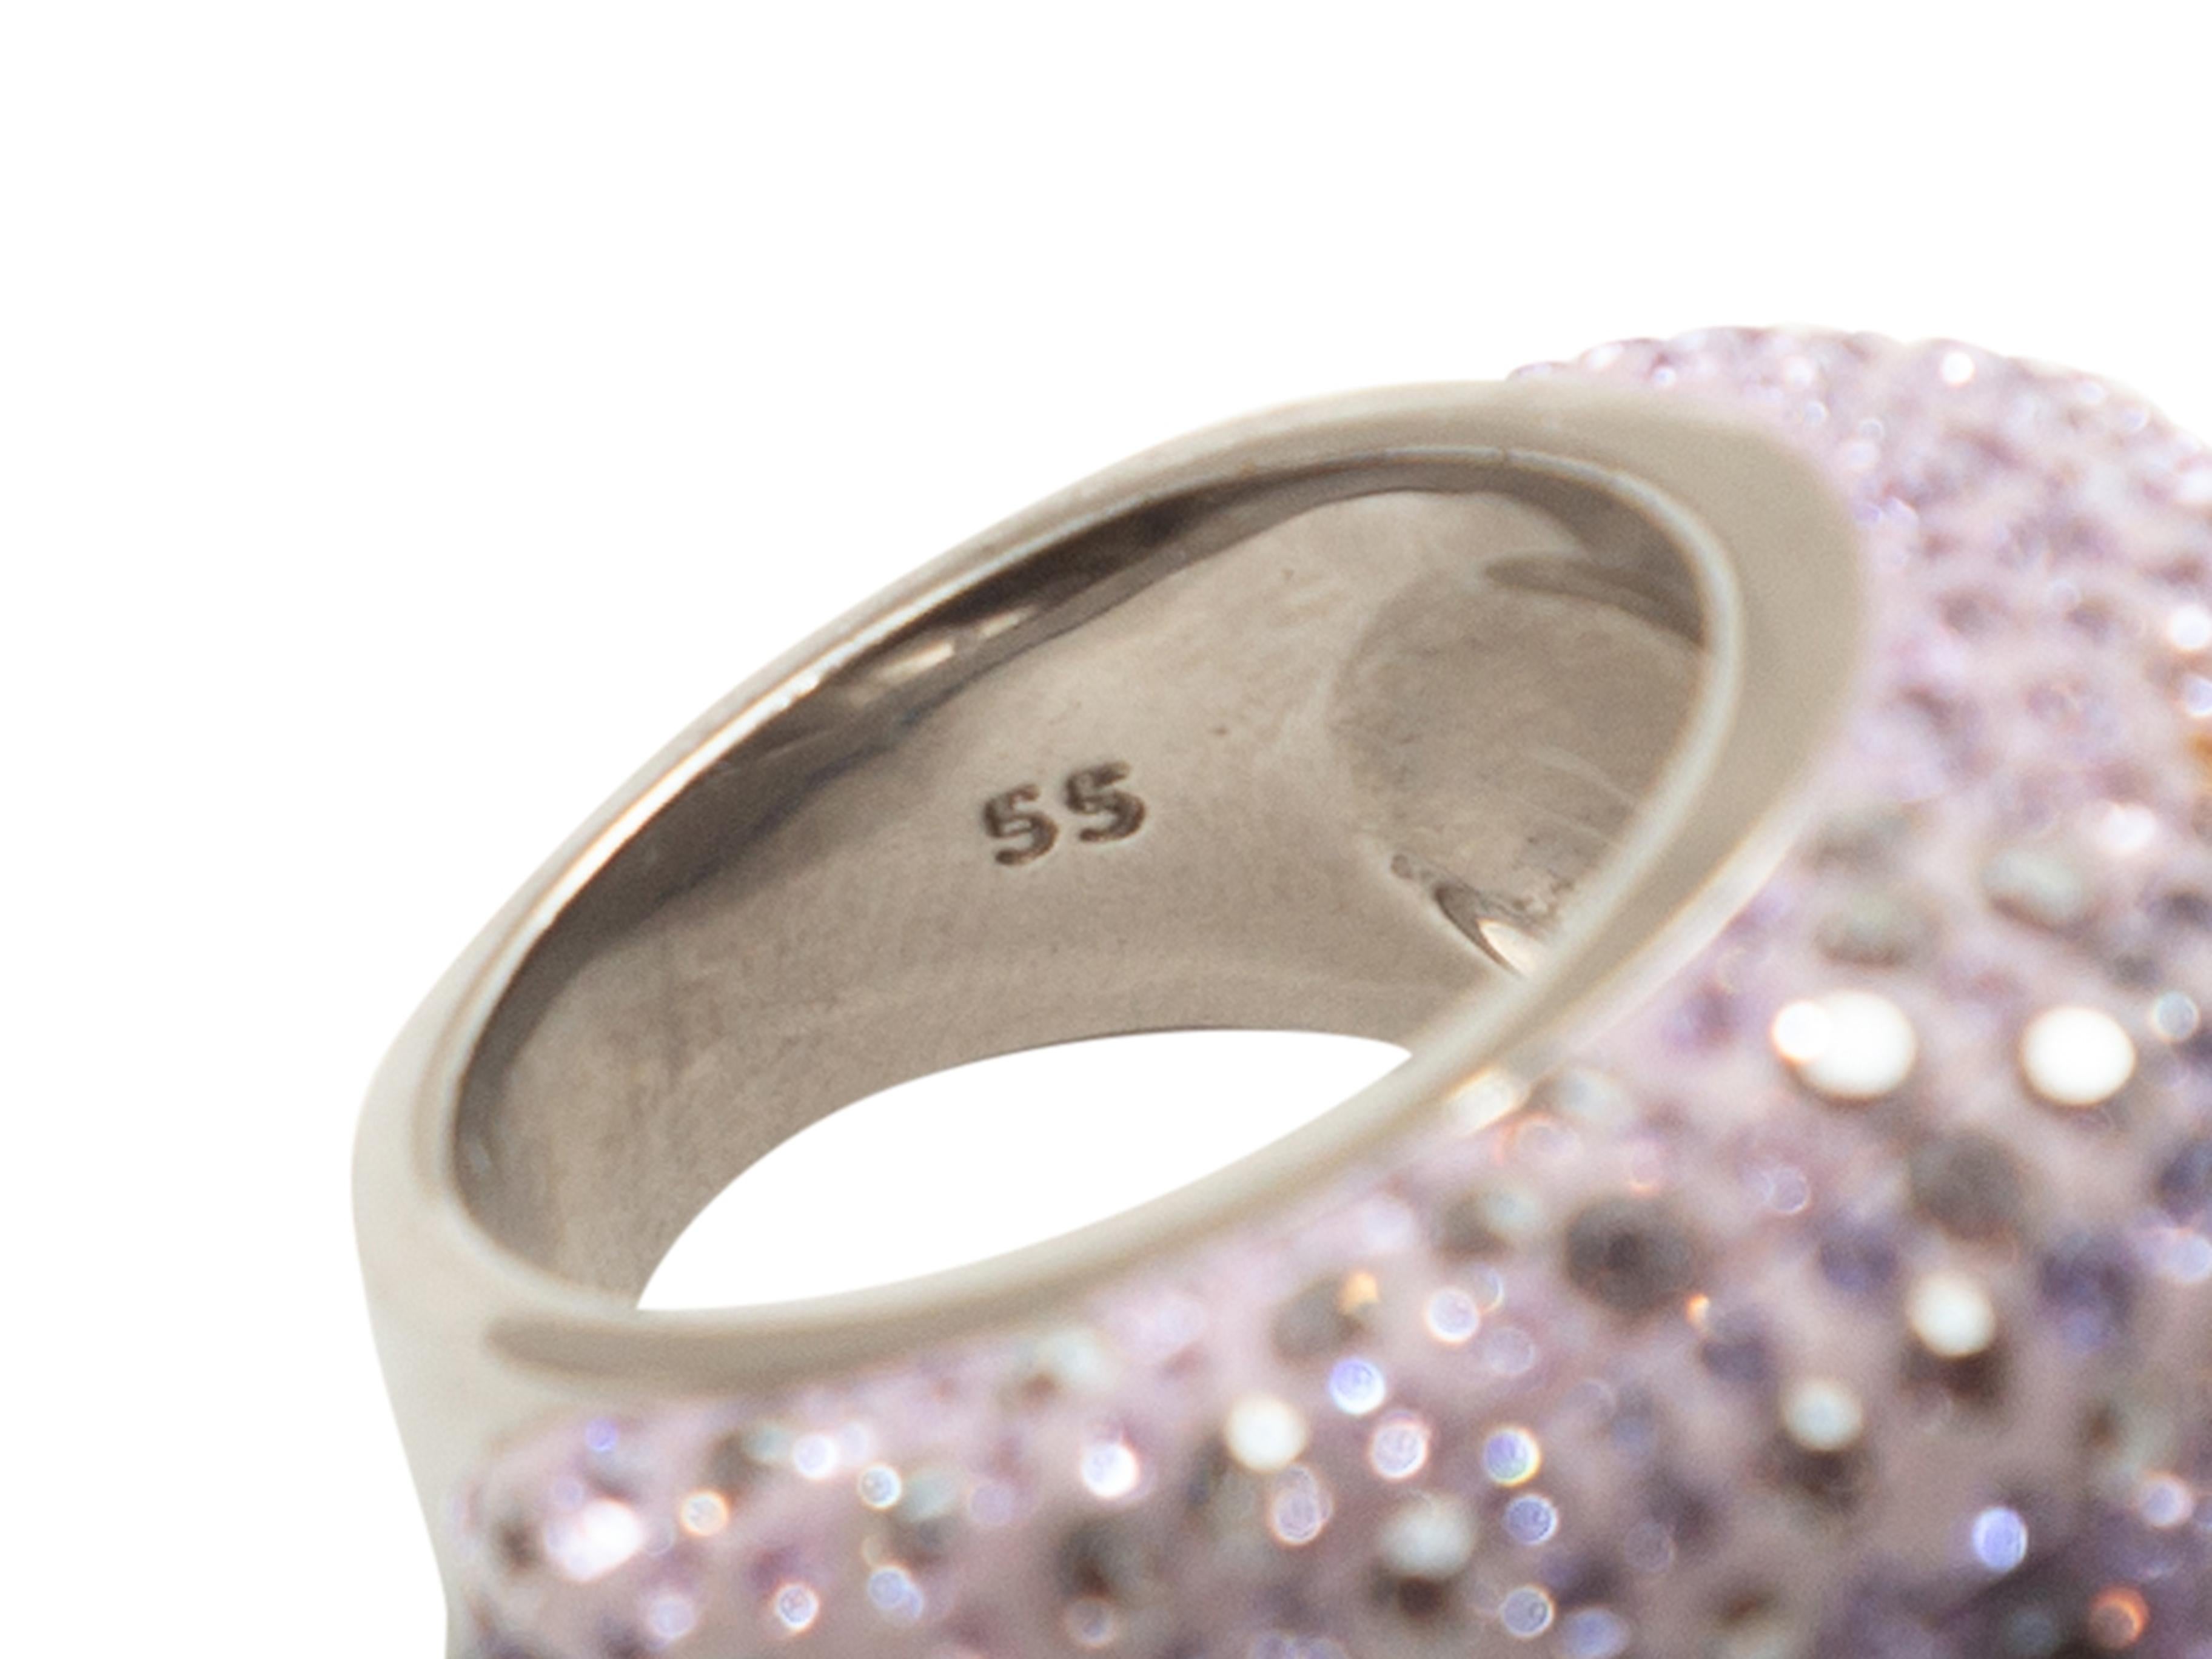 Product details: Lilac crystal-embellished large cocktail ring by Swarovski. 1